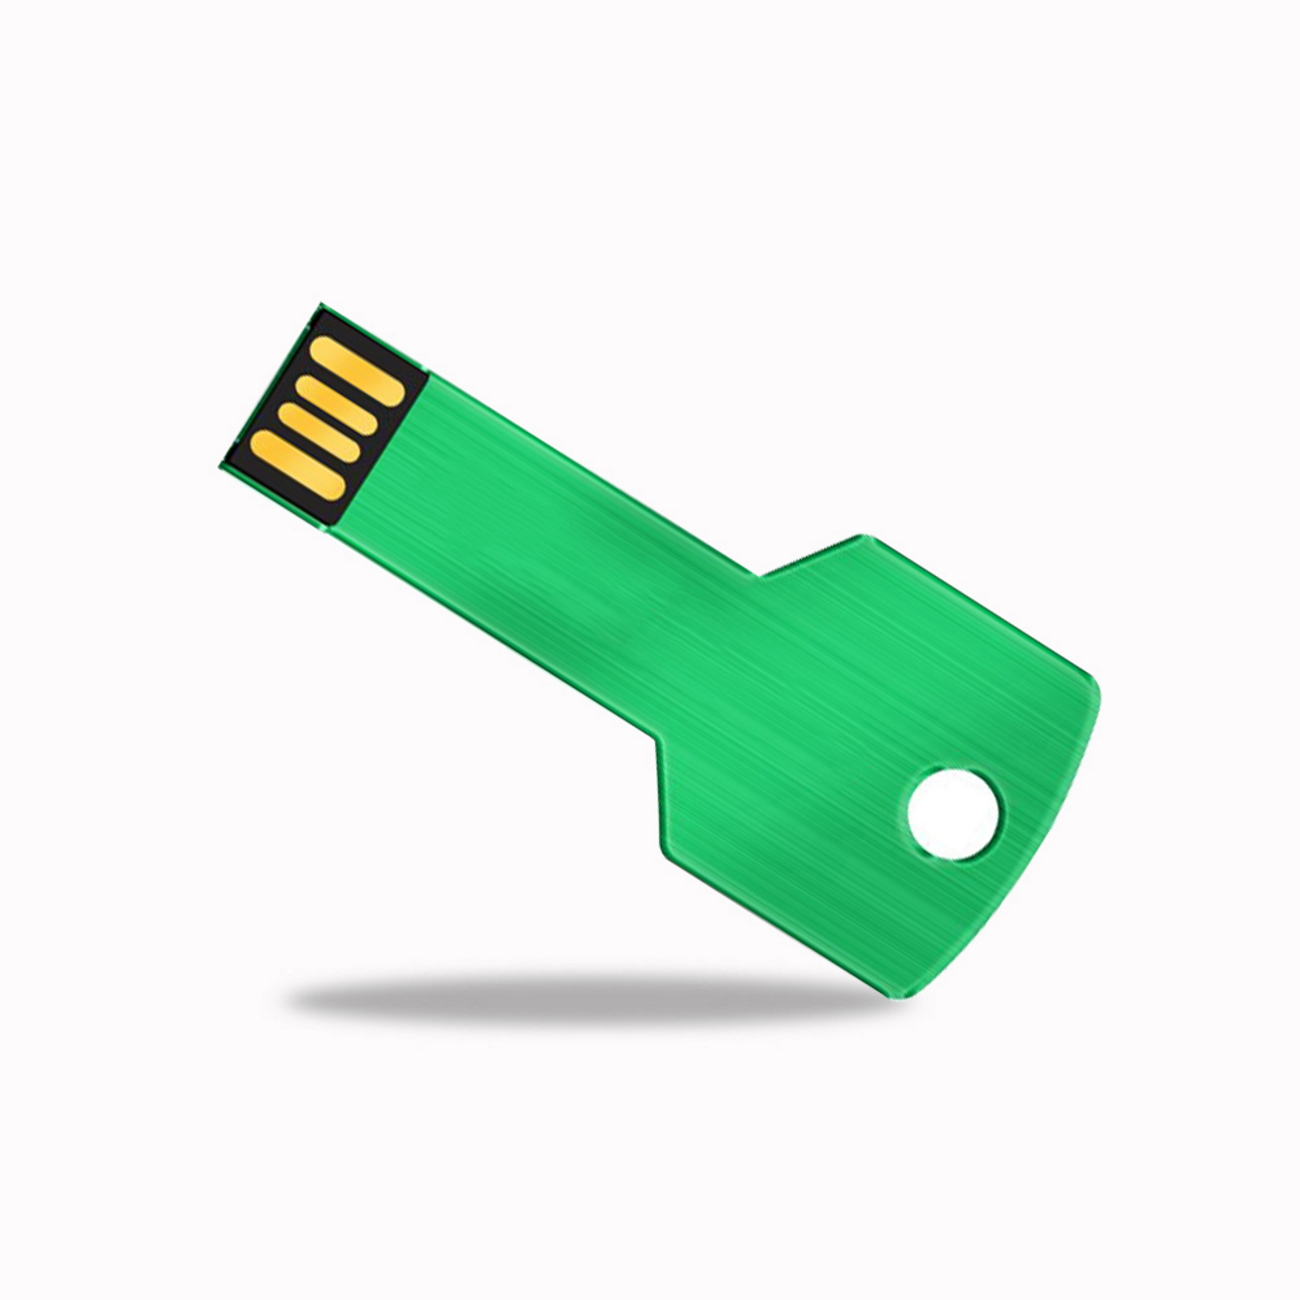 Key USB-Stick USB Grün 2GB (Grün, 2 GERMANY GB)